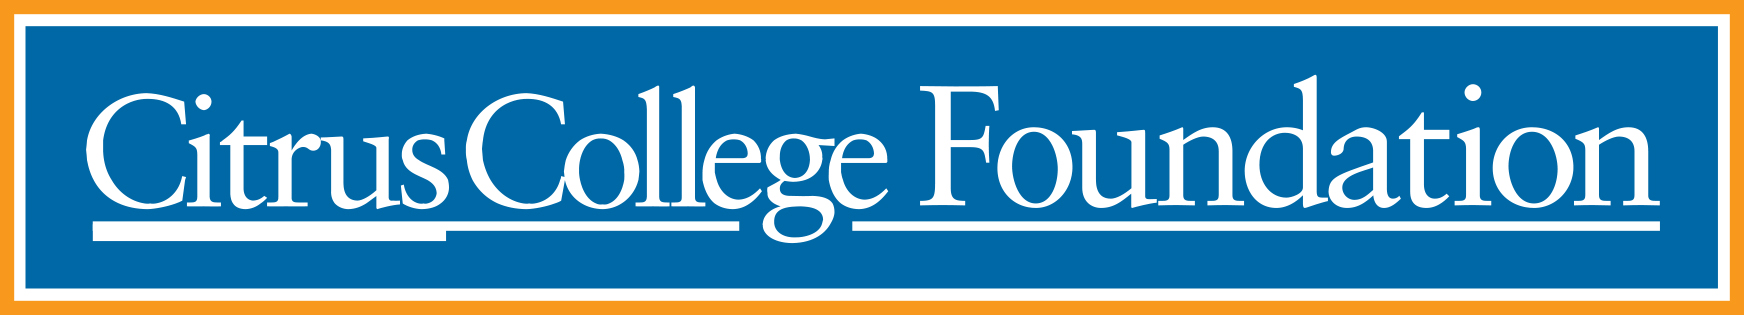 citrus-college-foundation-logo (1).jpg